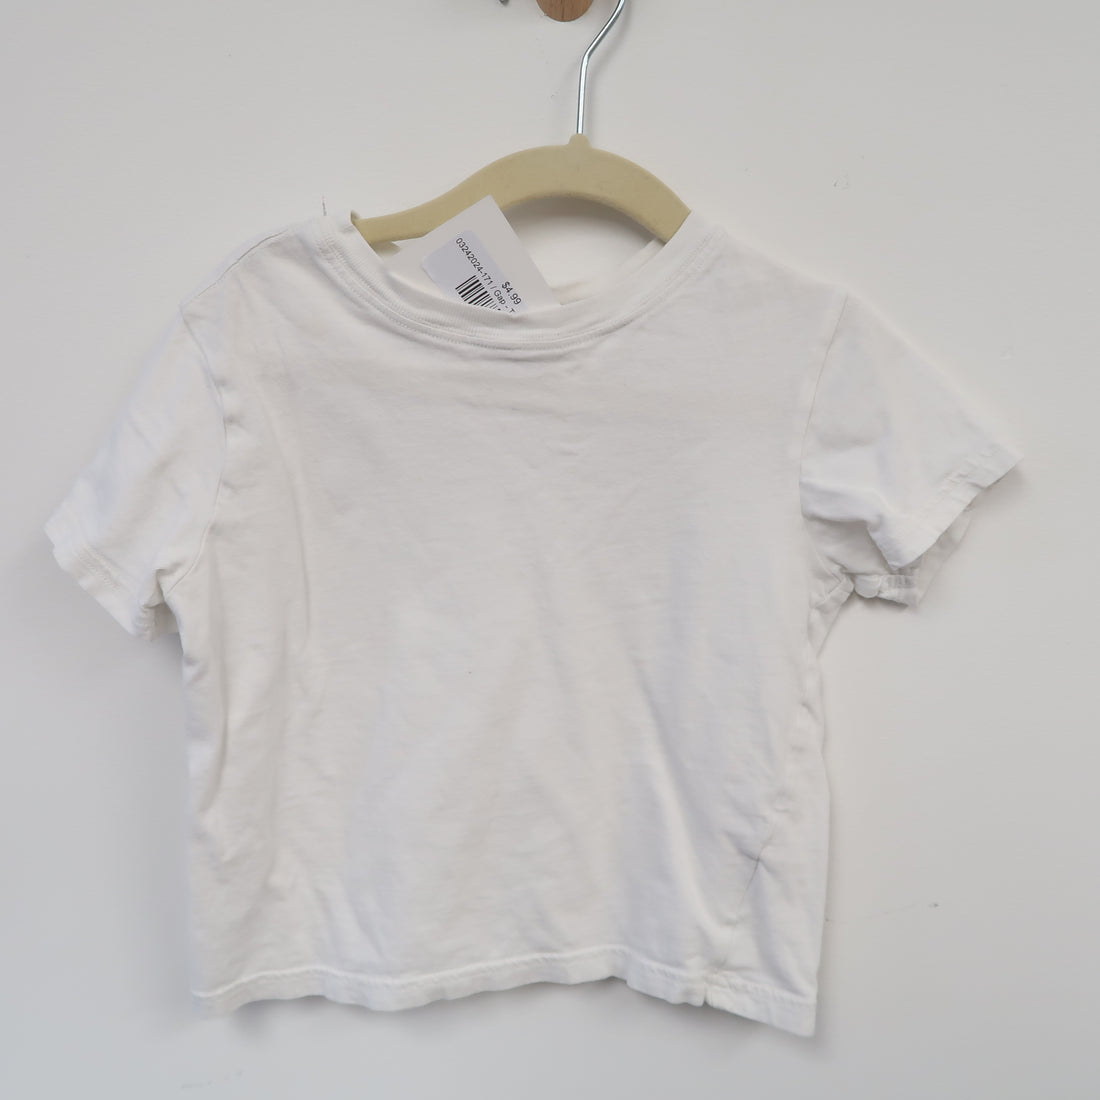 Gap - T-Shirt (3T)